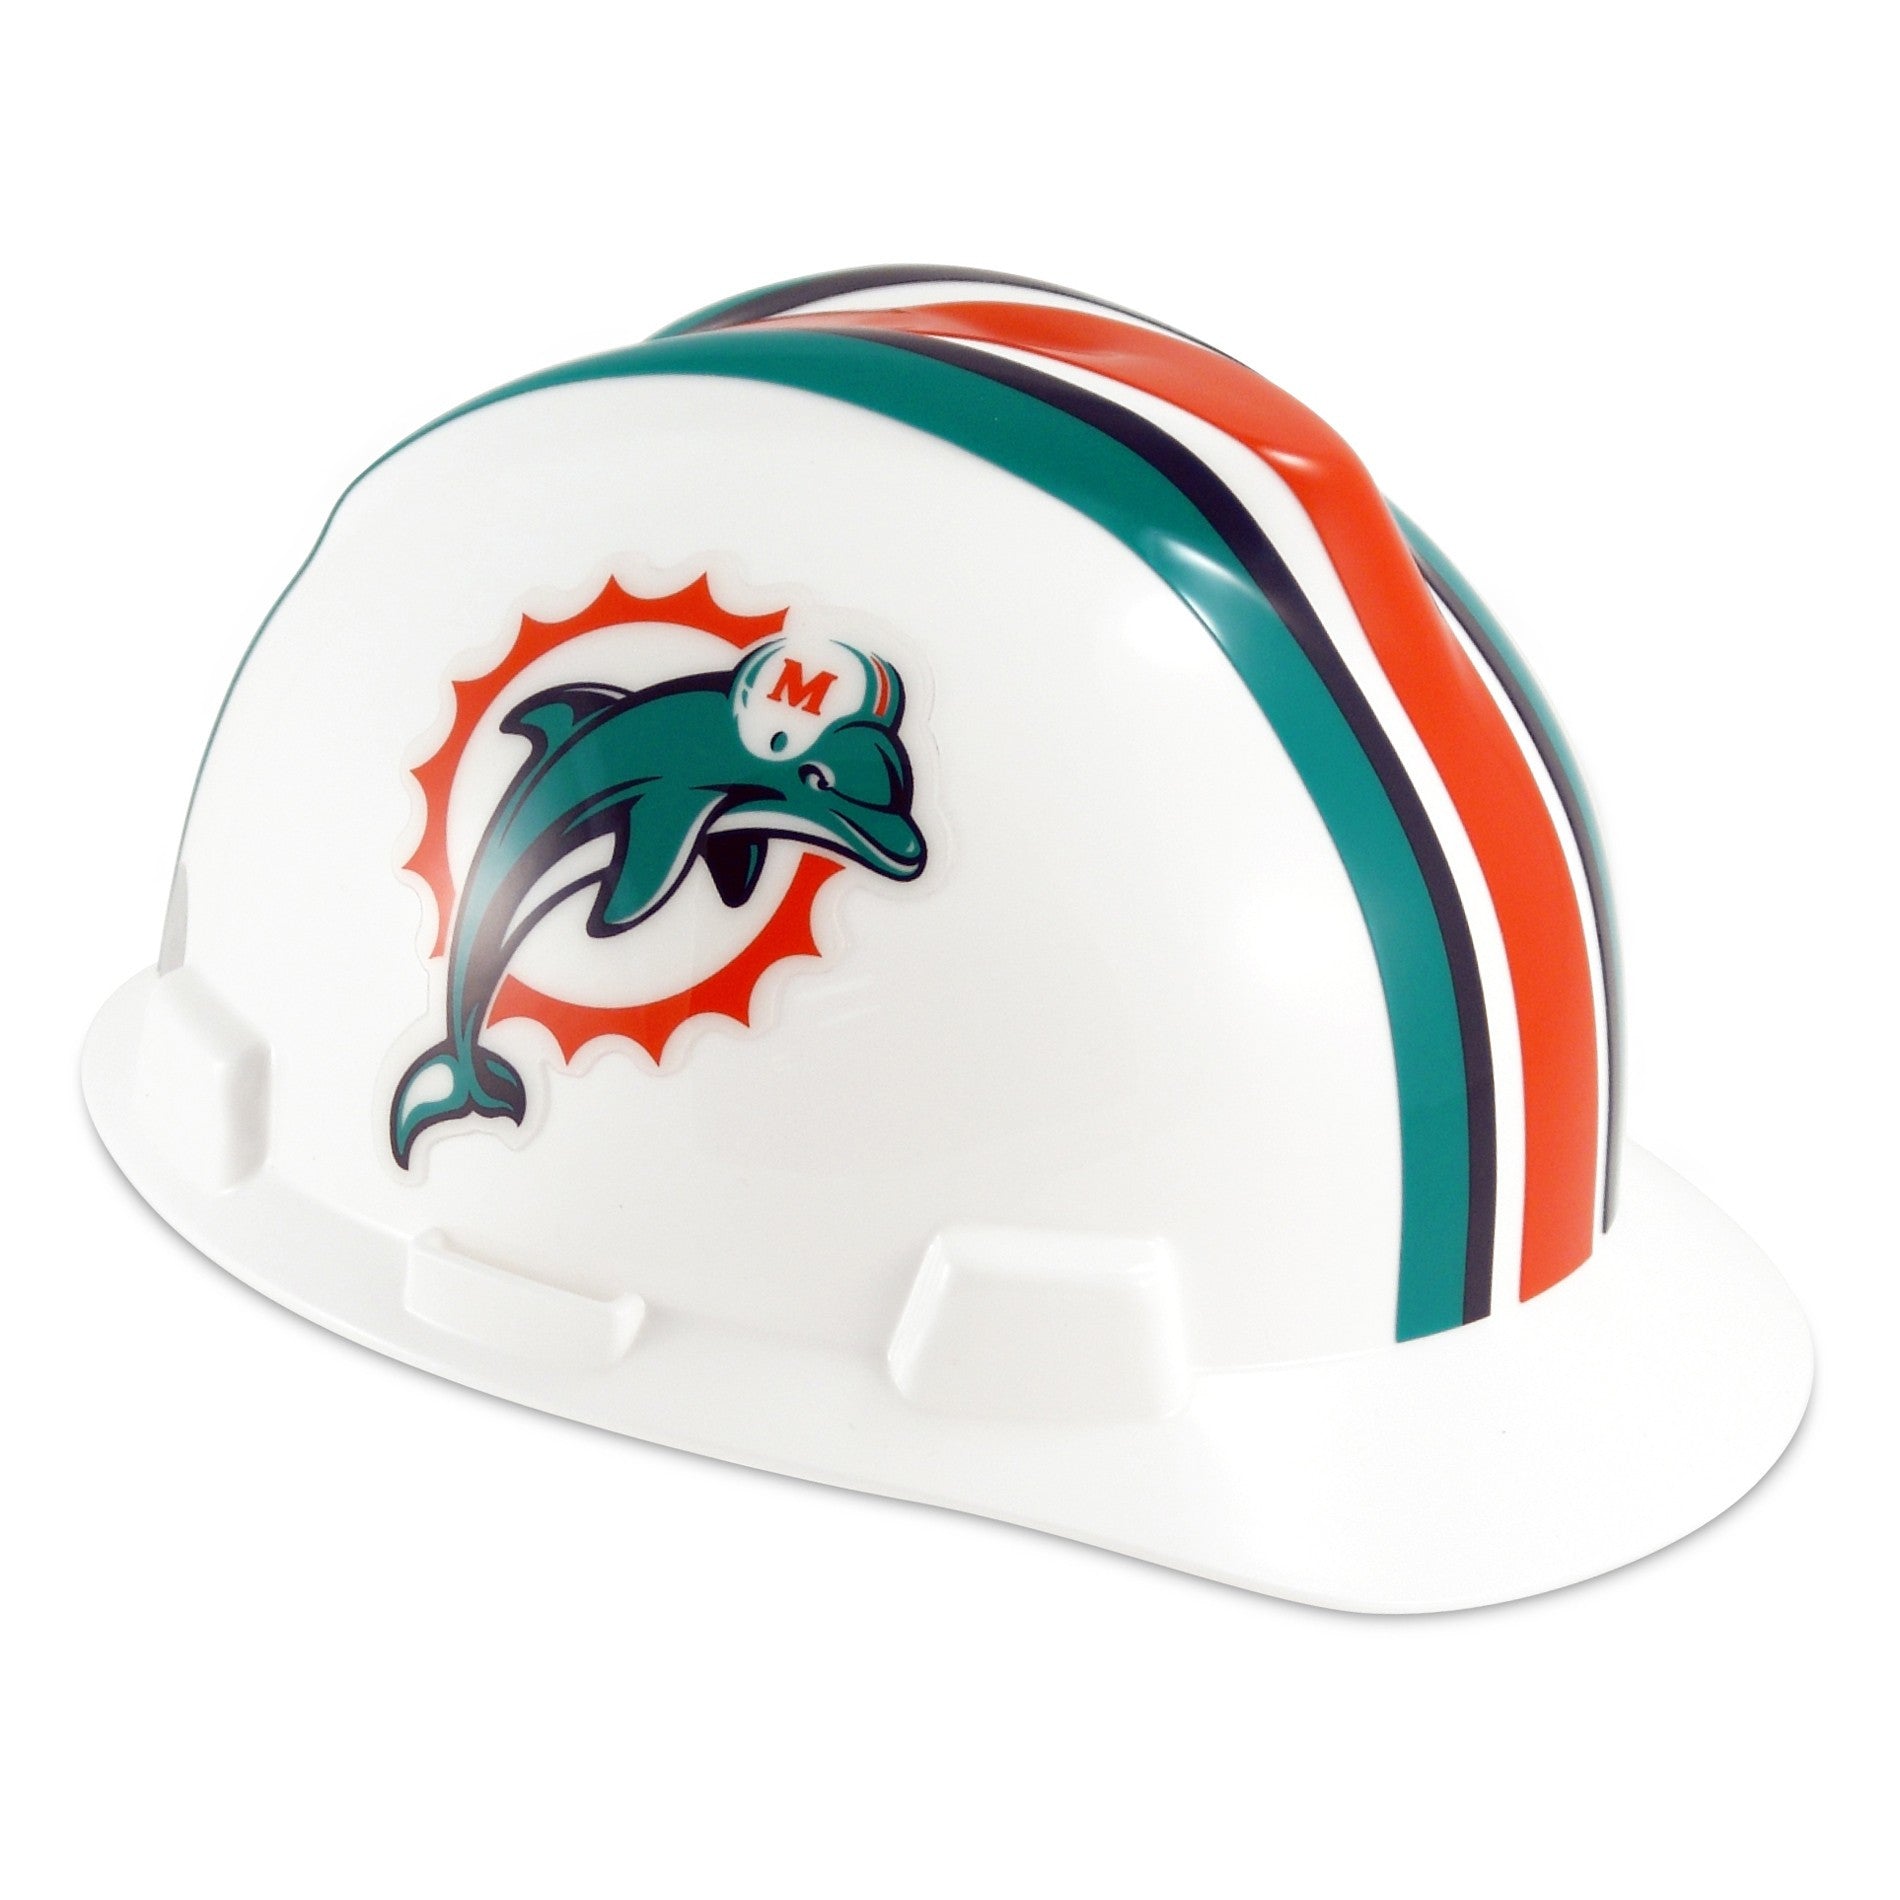 Miami Dolphins hard hat